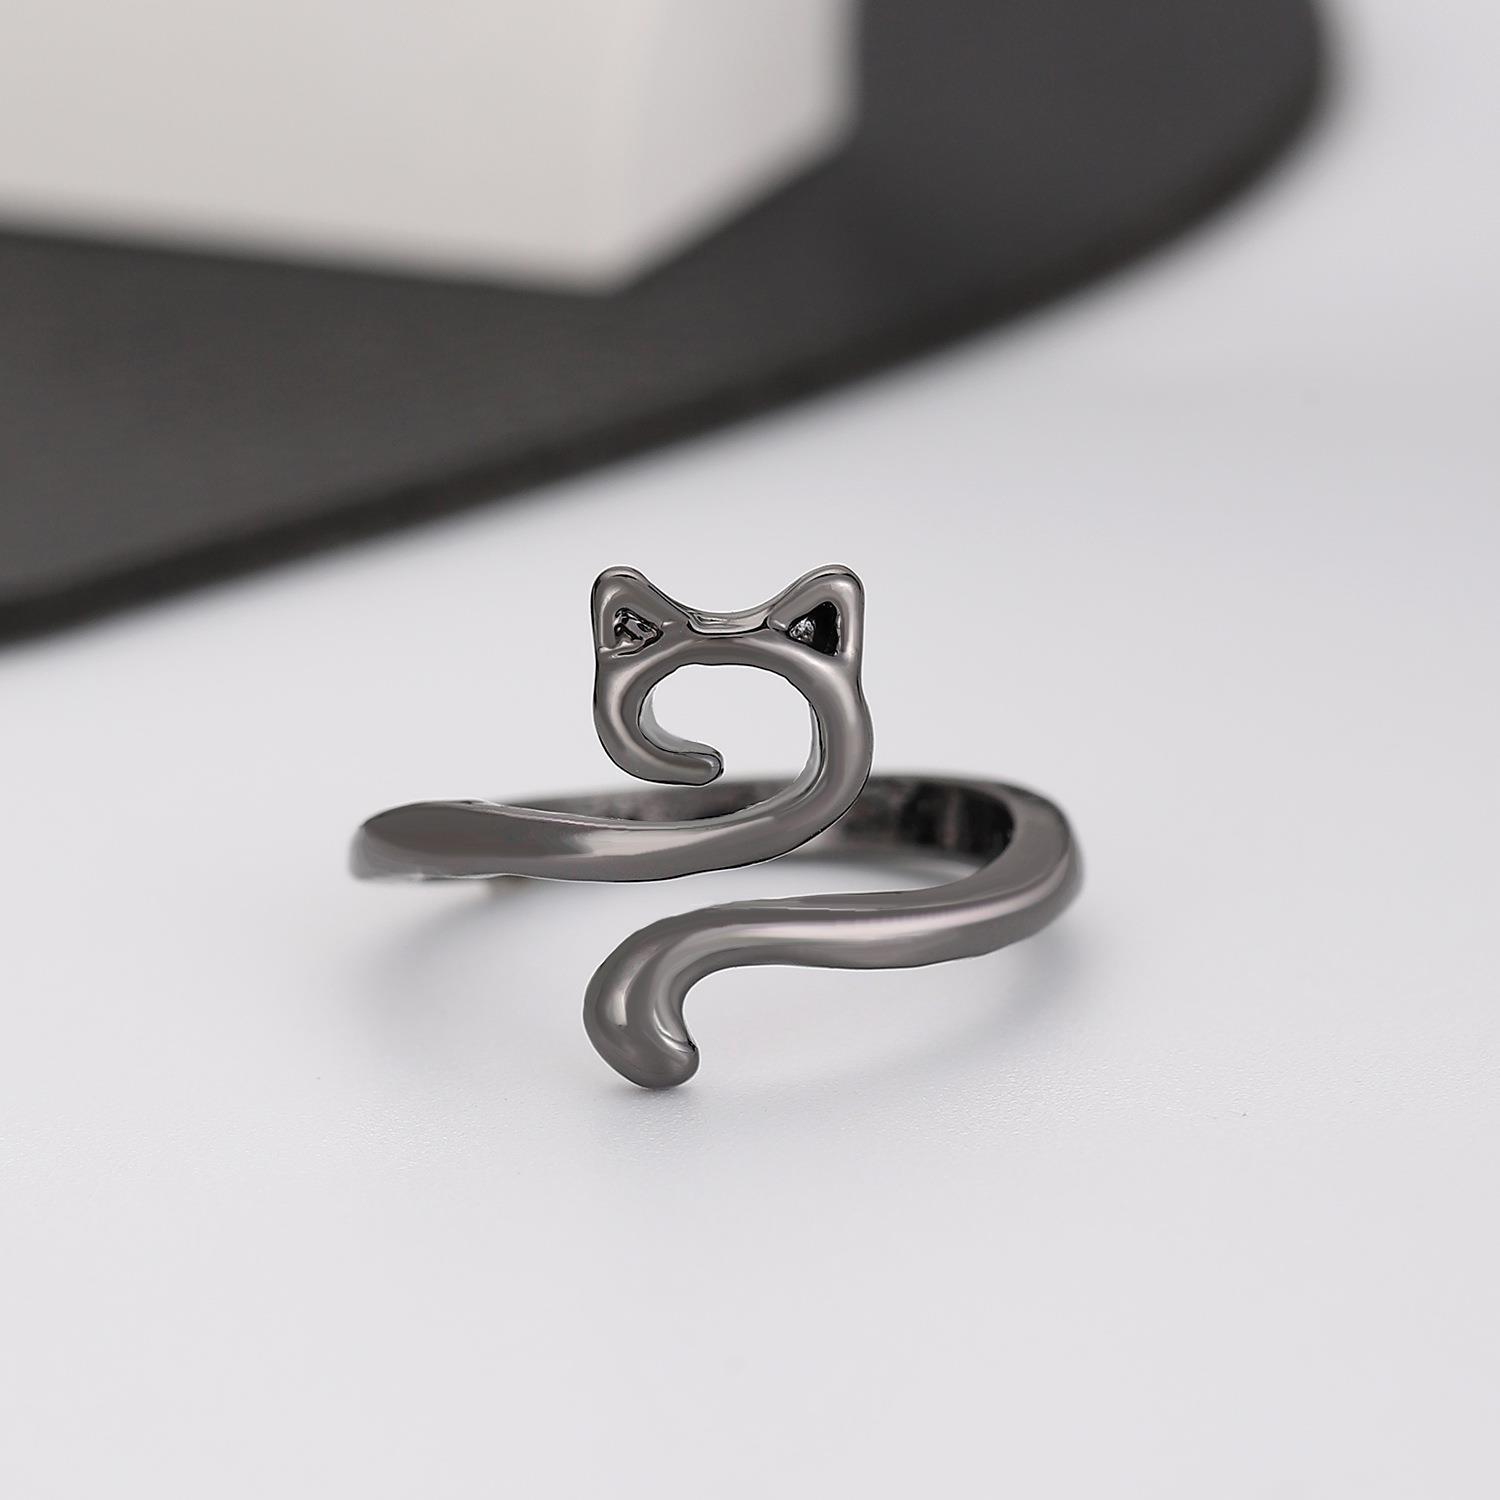 Opening Adjustable Fashion Animal Cat Ring Jewelry欧美猫戒指